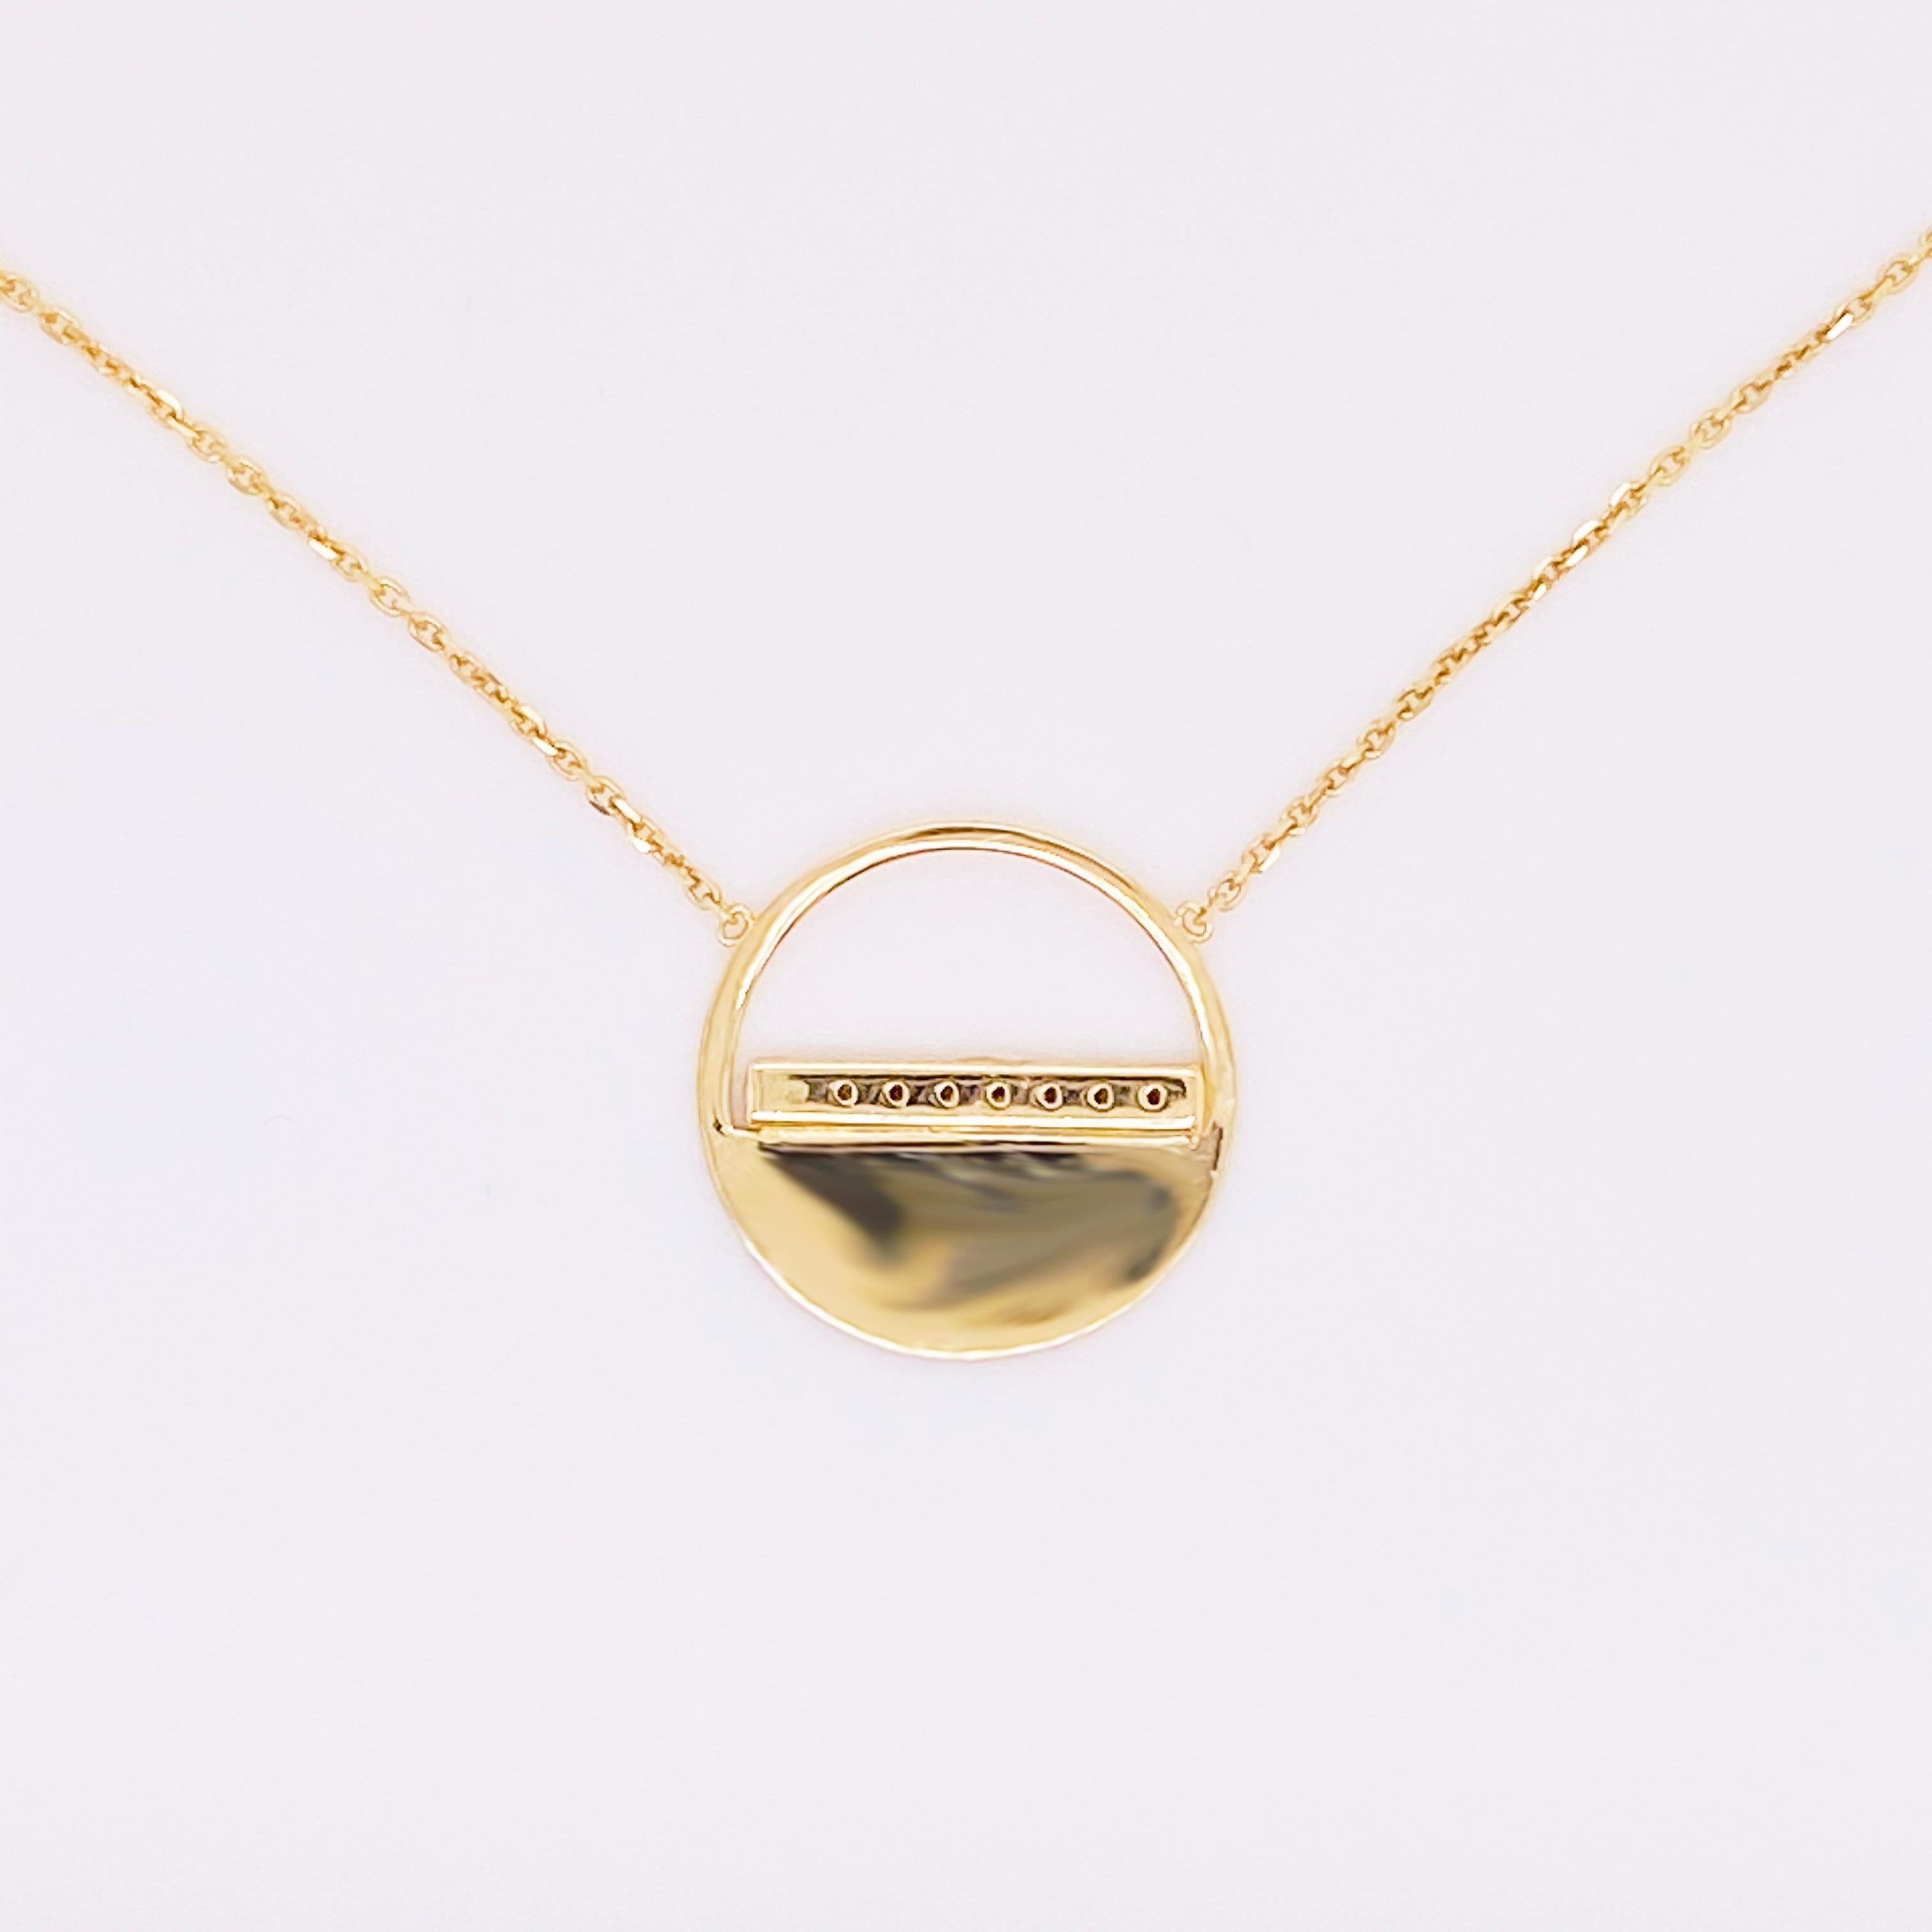 Contemporary Circle Diamond Necklace, 14 Karat Gold, Disk, Circle, Fashion, #NeckMess, Italy For Sale